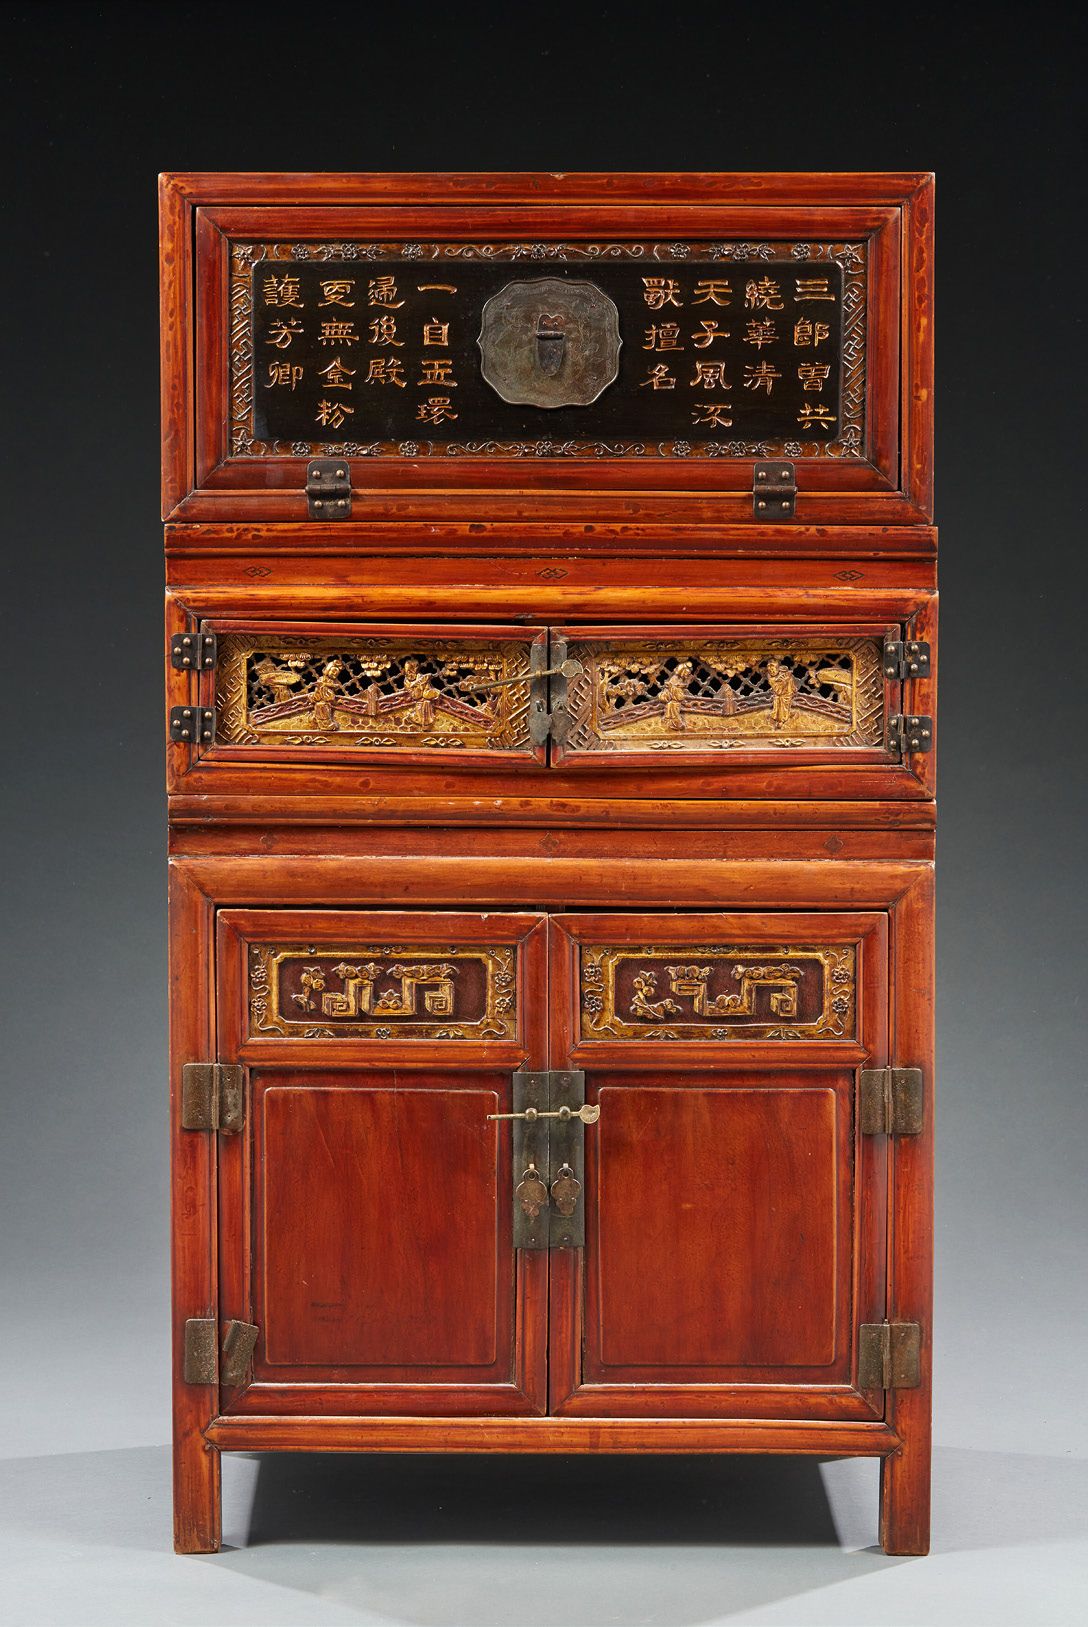 CHINE 果木柜，有漆面书法图案和镂空面板
1900年左右。
尺寸：137 x 76 x 49.5厘米